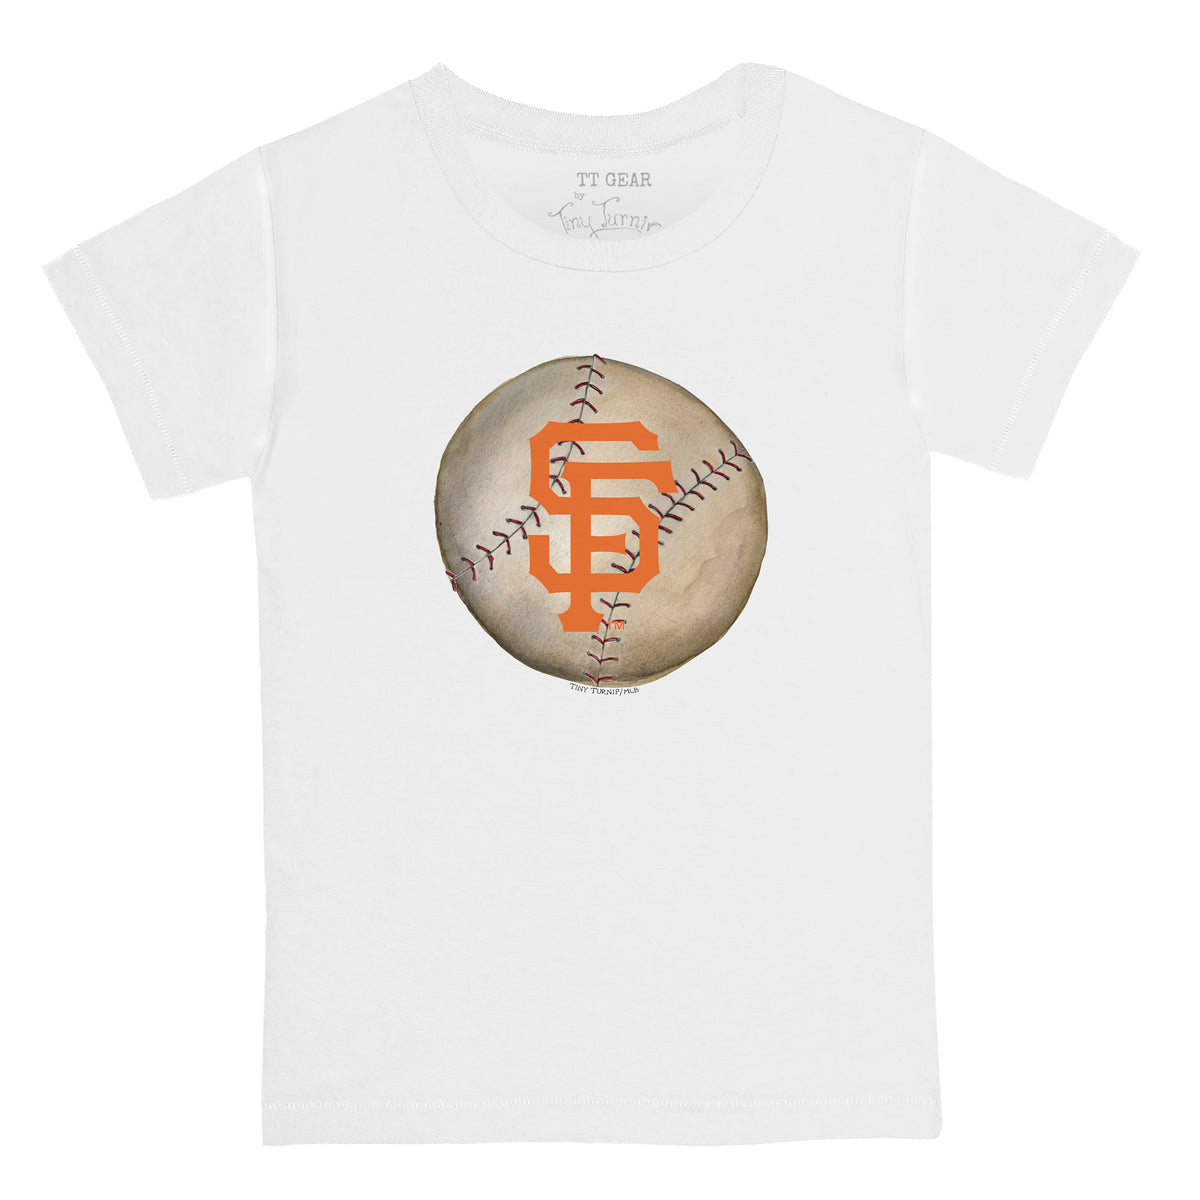 MLB Genuine Merchandise Giants Baseball T-shirt Top